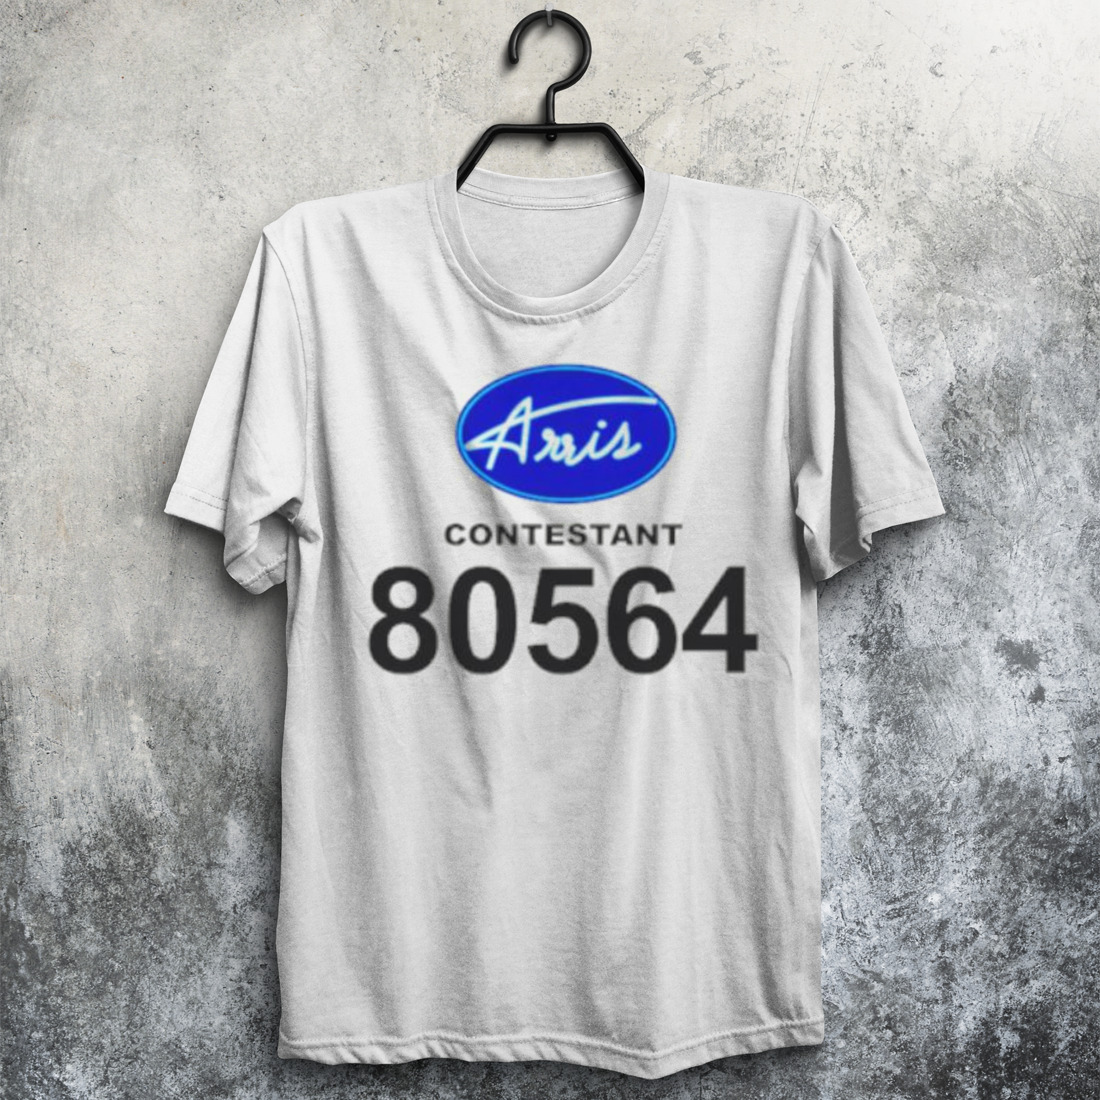 Aris Contestant 80564 shirt